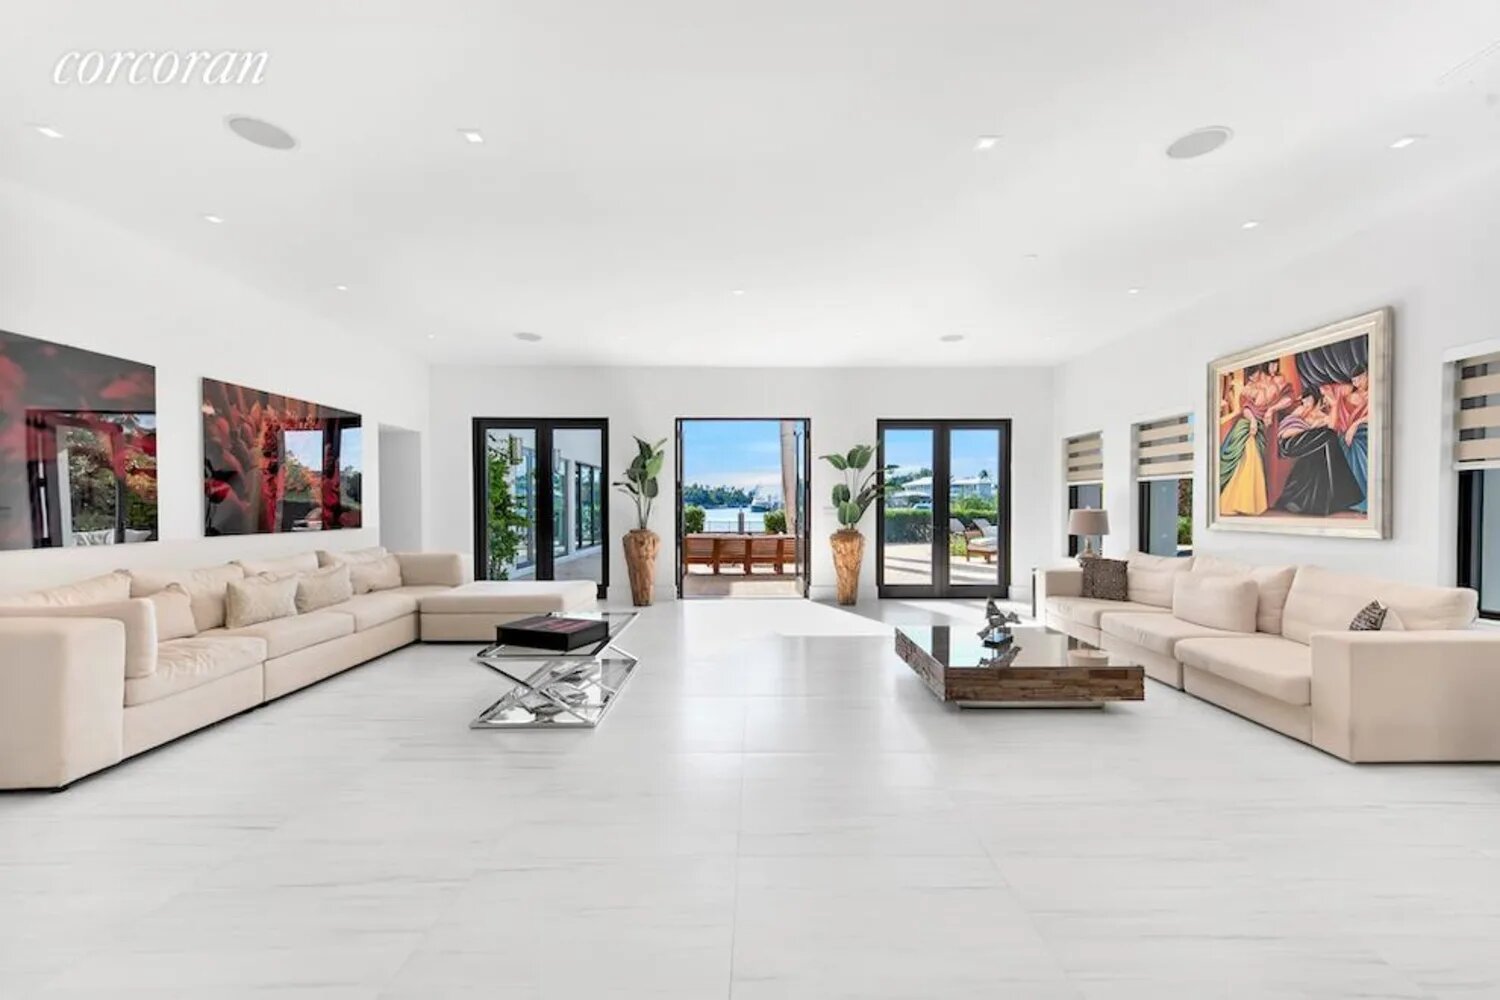 Casa Jennifer Lopez y Ben Affleck en Miami salón en tonos neutros